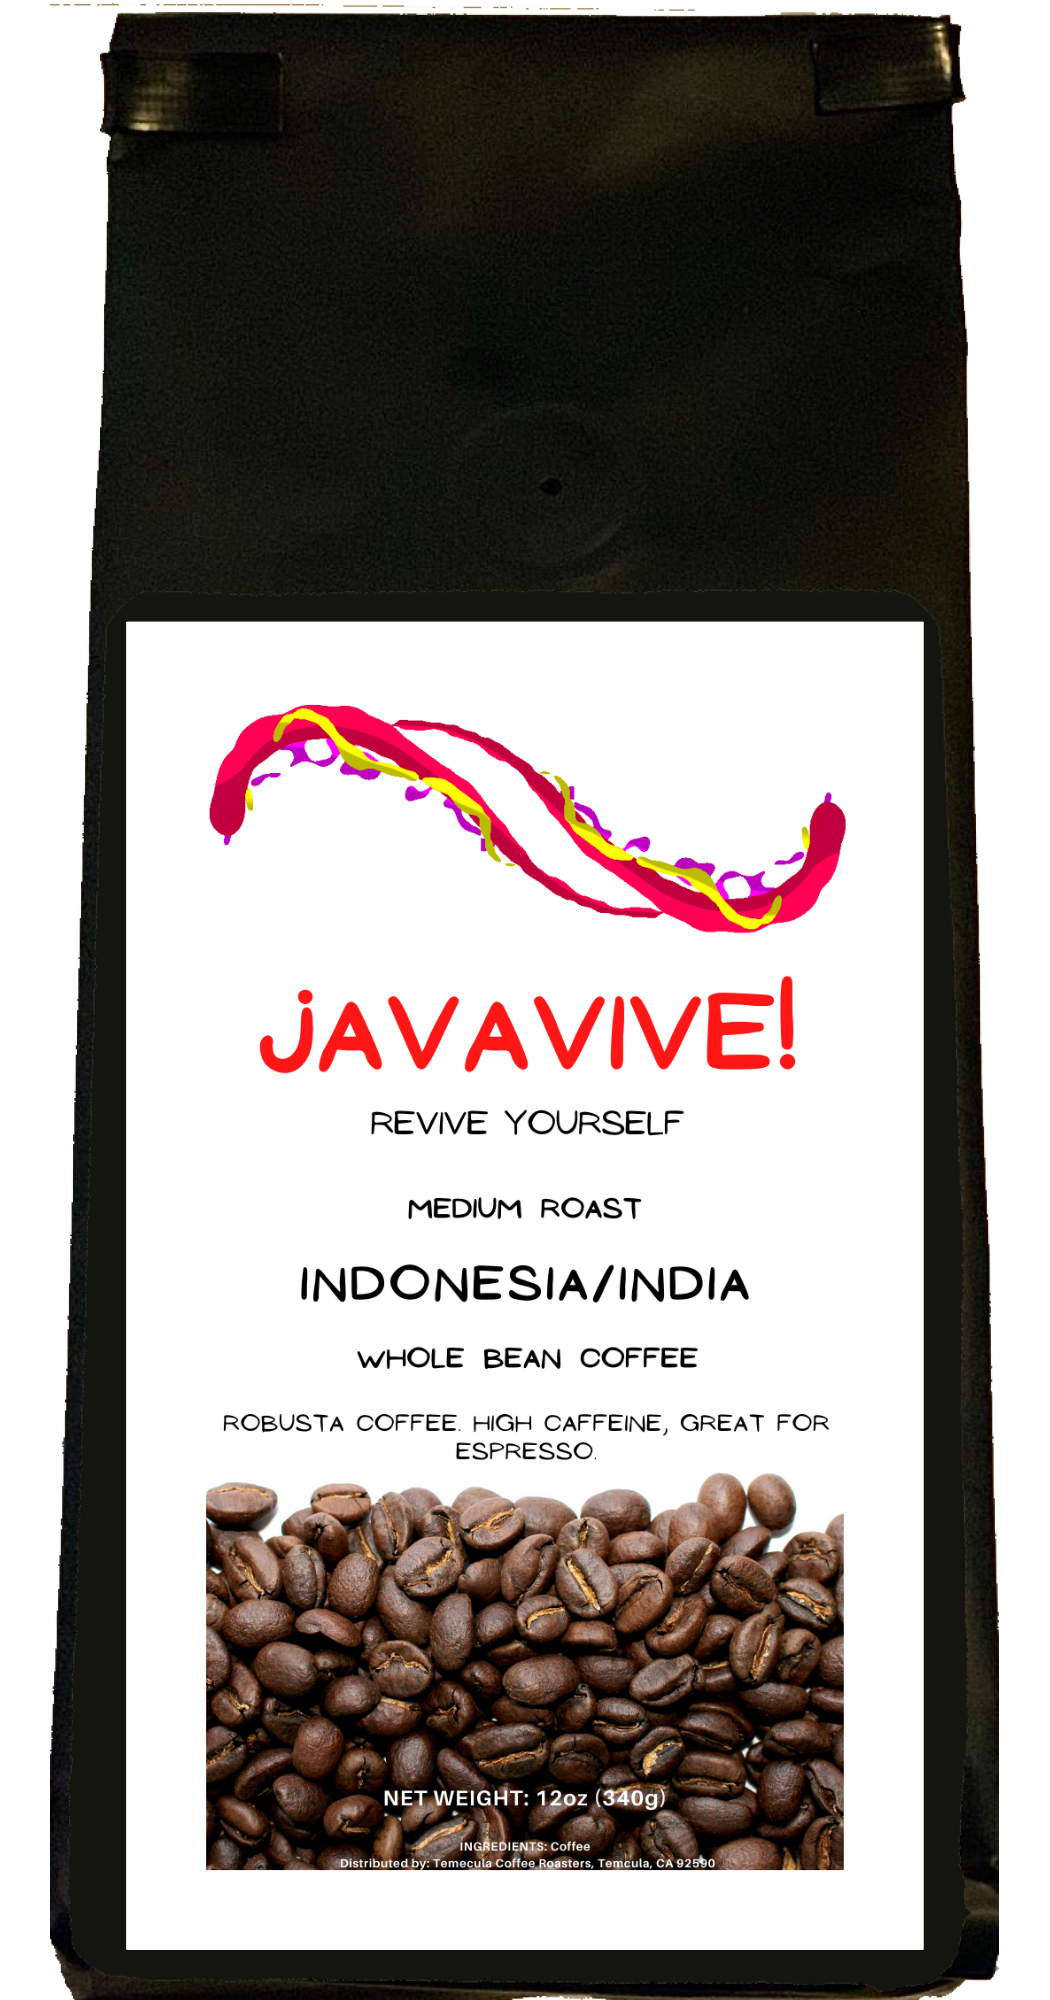 Indonesia/India - High Caffeine